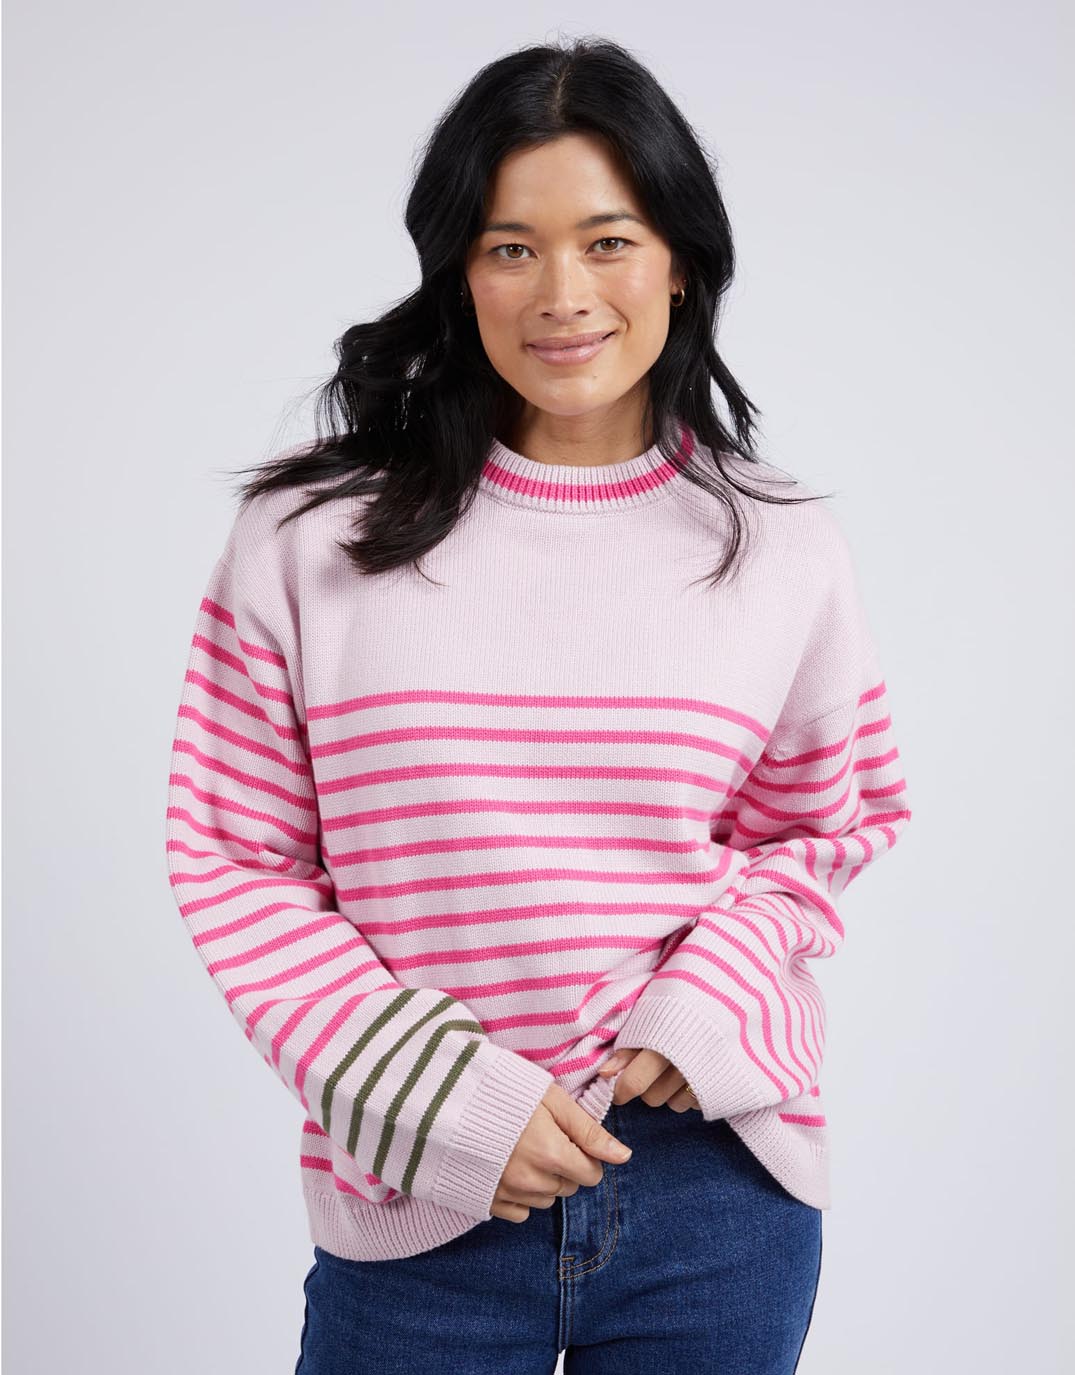 elm-penny-stripe-knit-powder-pink-shocking-pink-stripe-womens-clothing